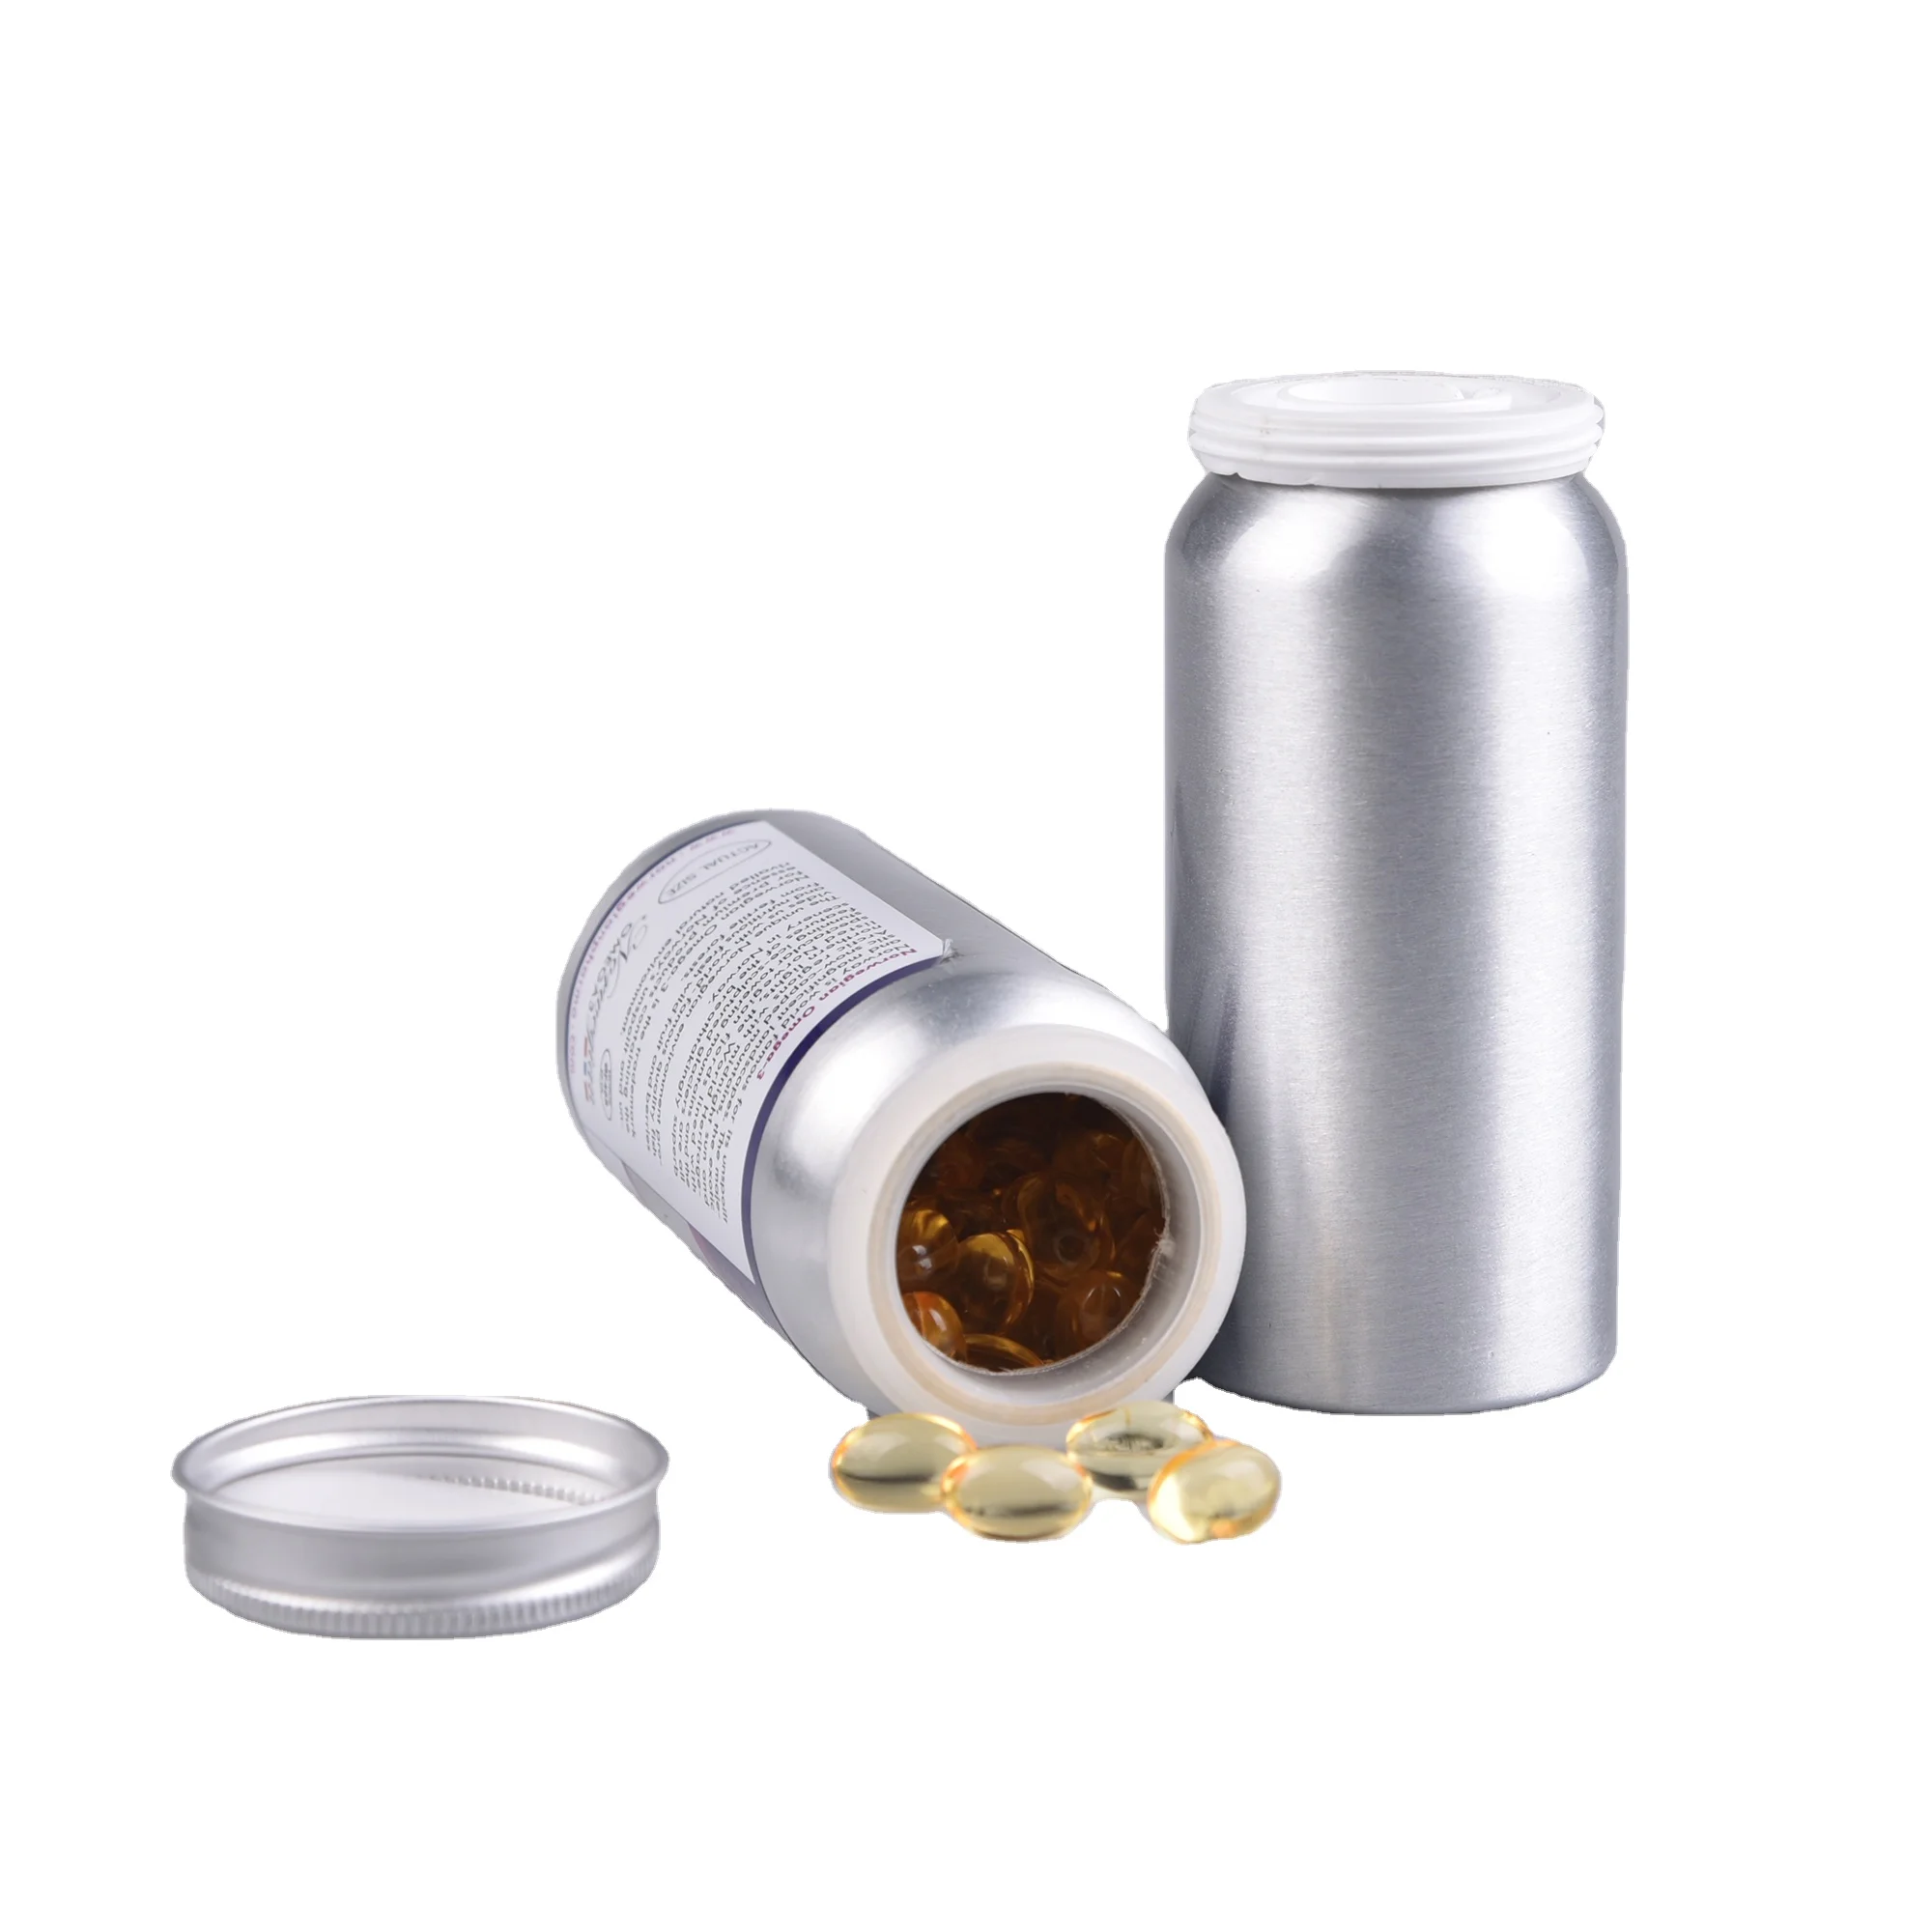 Aluminum Pill Bottle - China Supplier, Wholesale